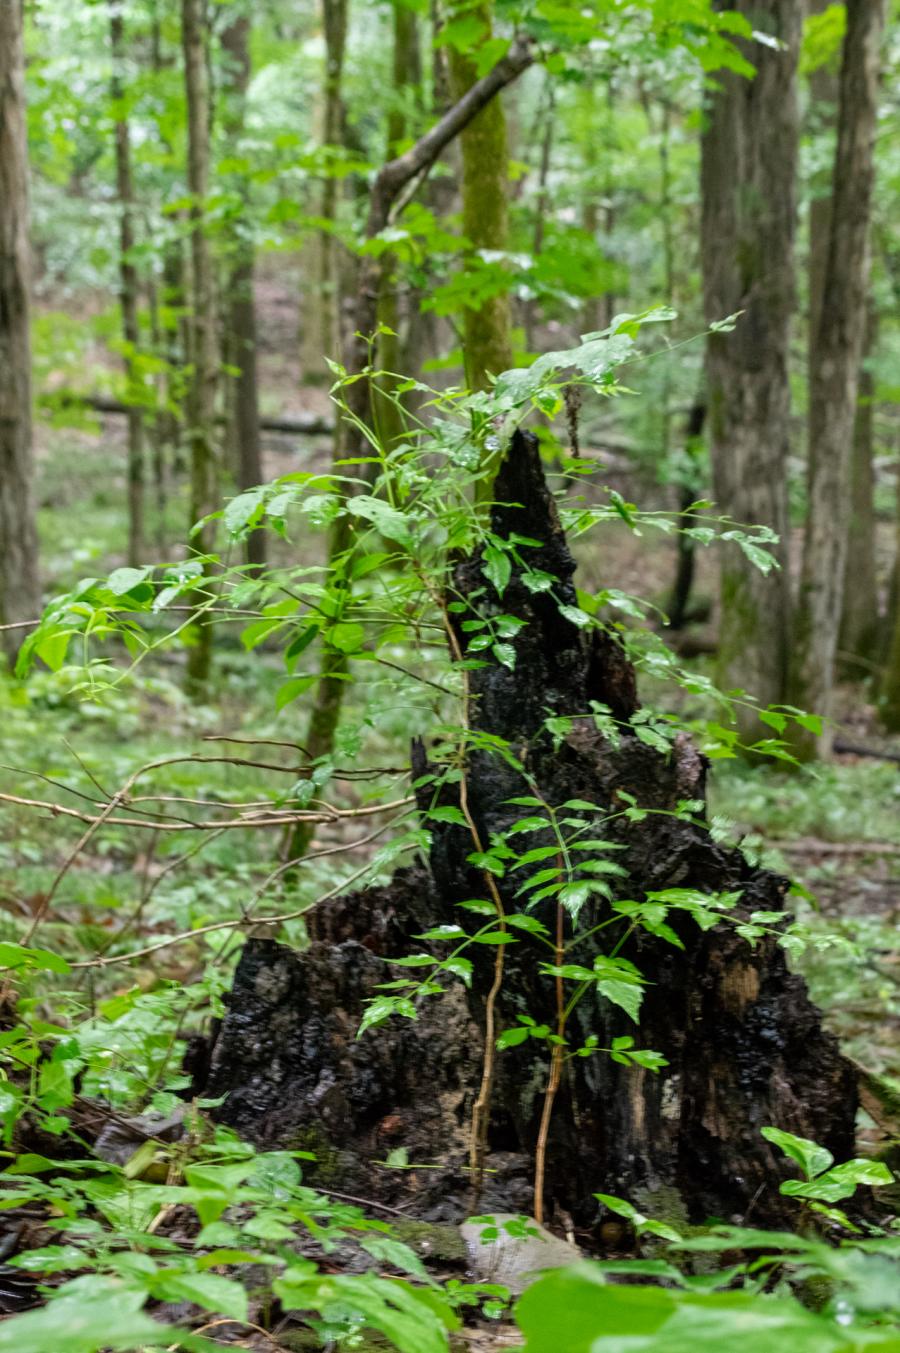 Keel Mountain Vine Growing On Tree Stump